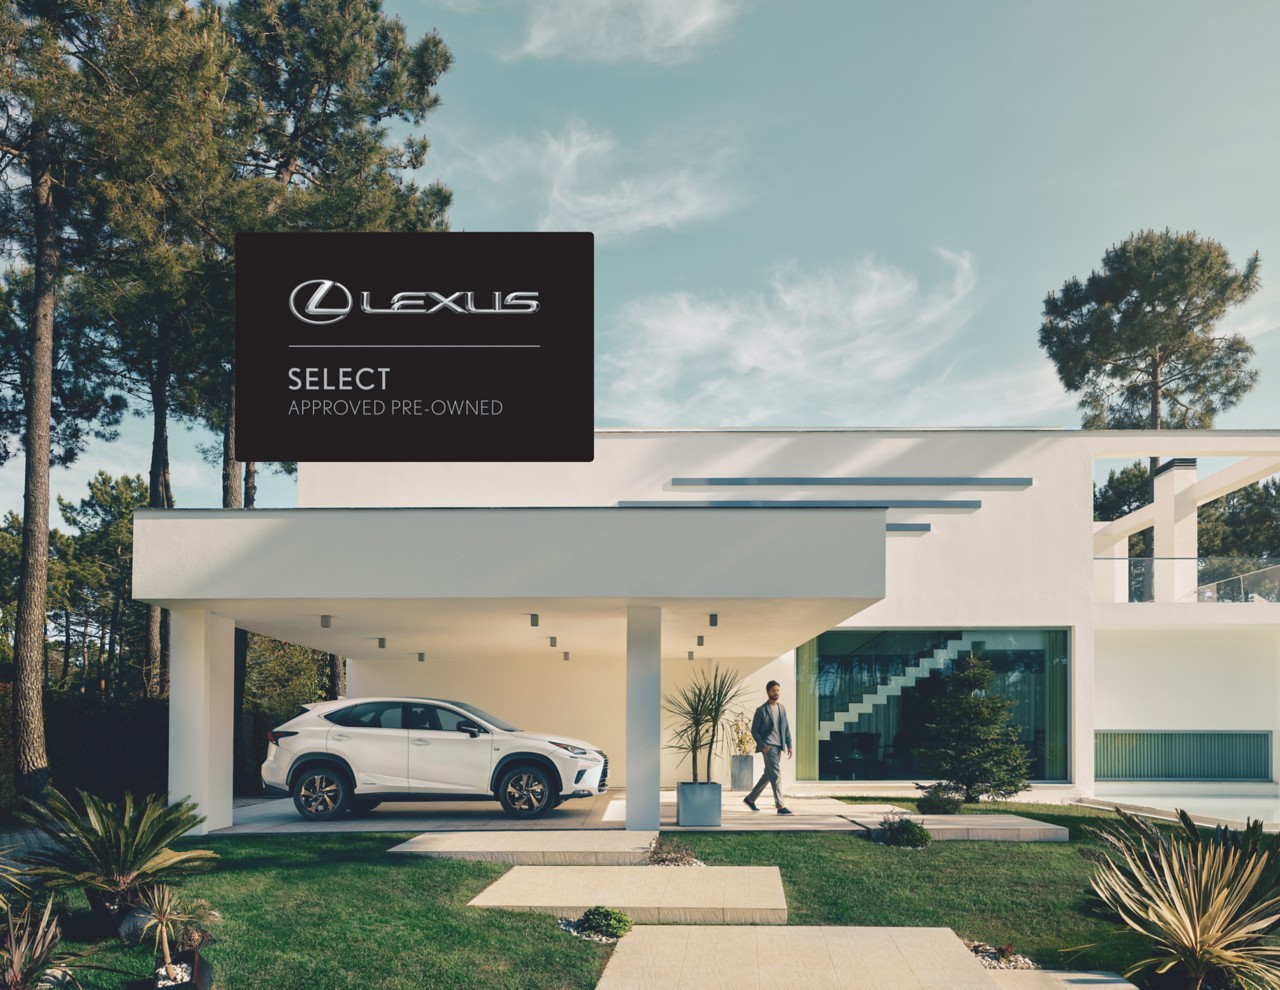 Lexus car by modern building